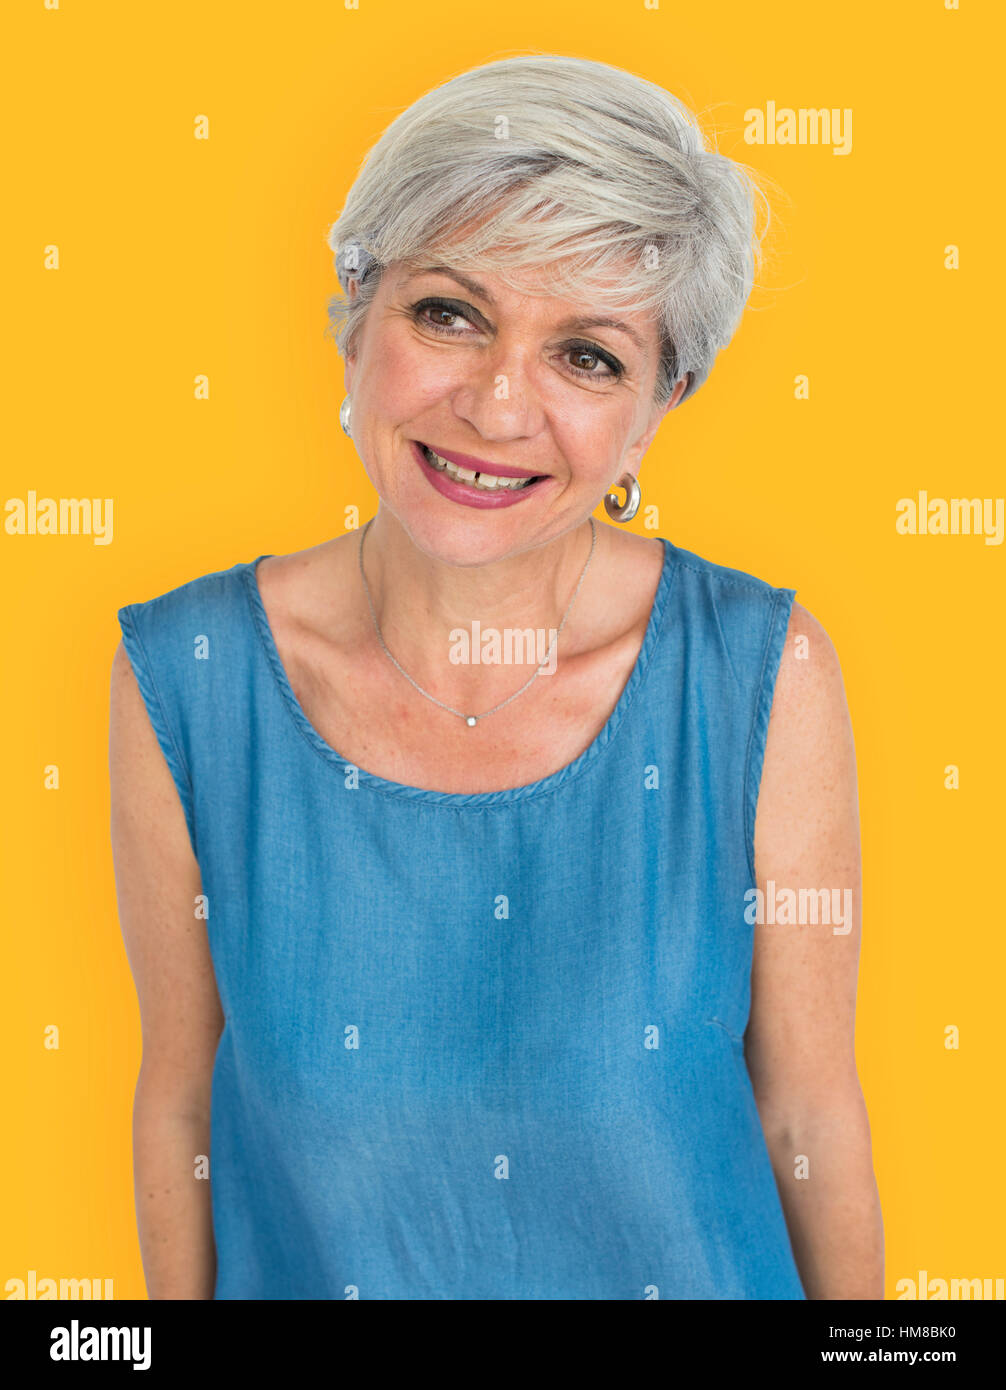 Woman Smiling Happiness Portrait Concept Stock Photo